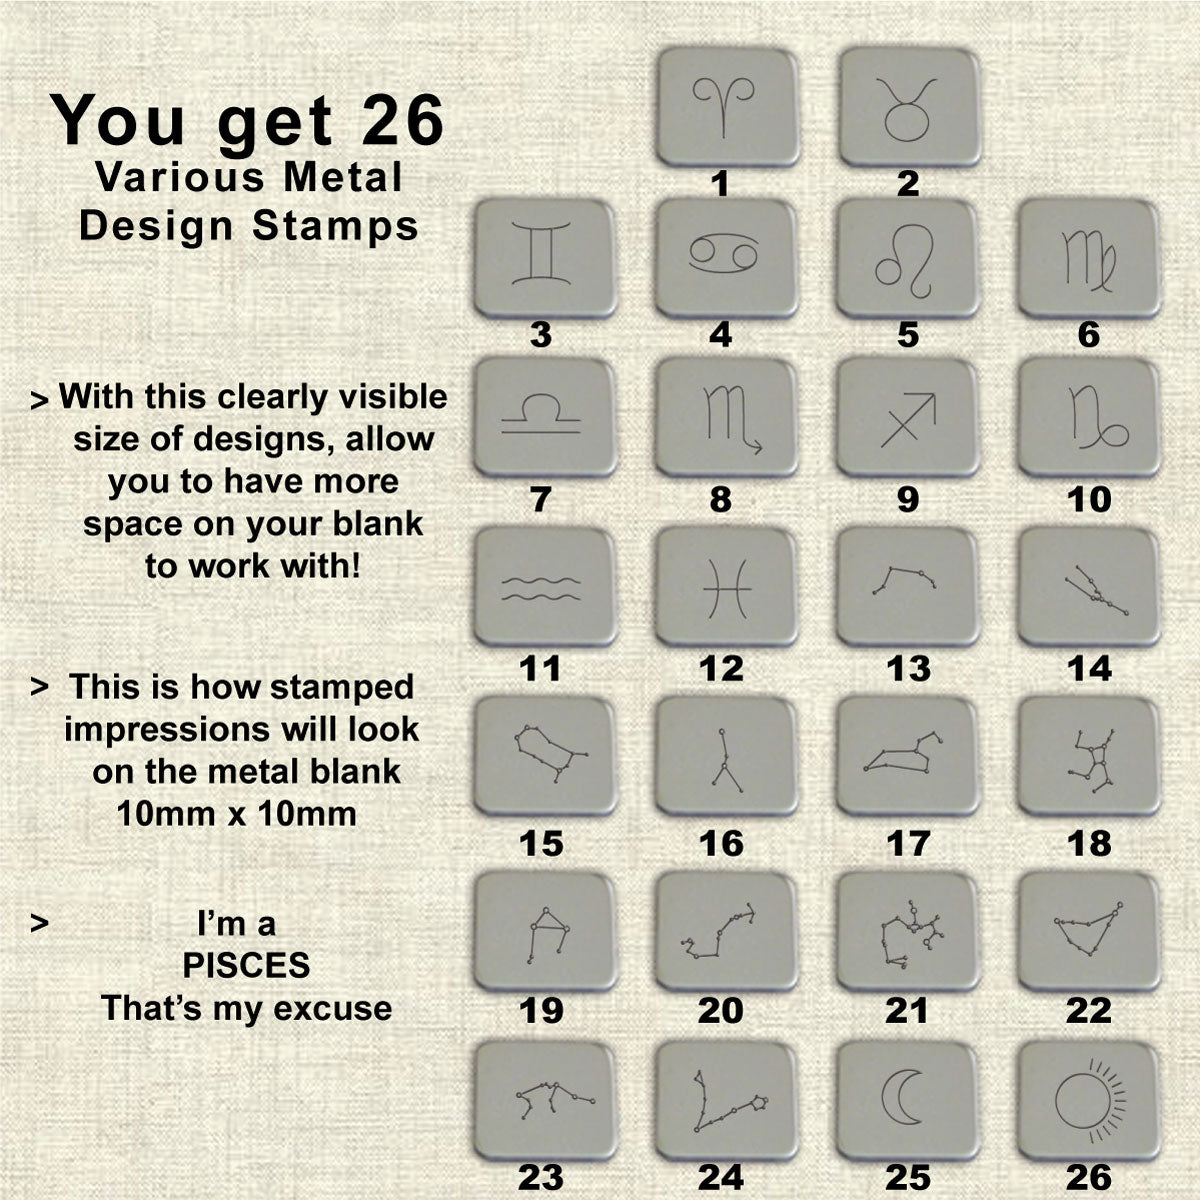 26 ZODIAC Design stamps, Part 1